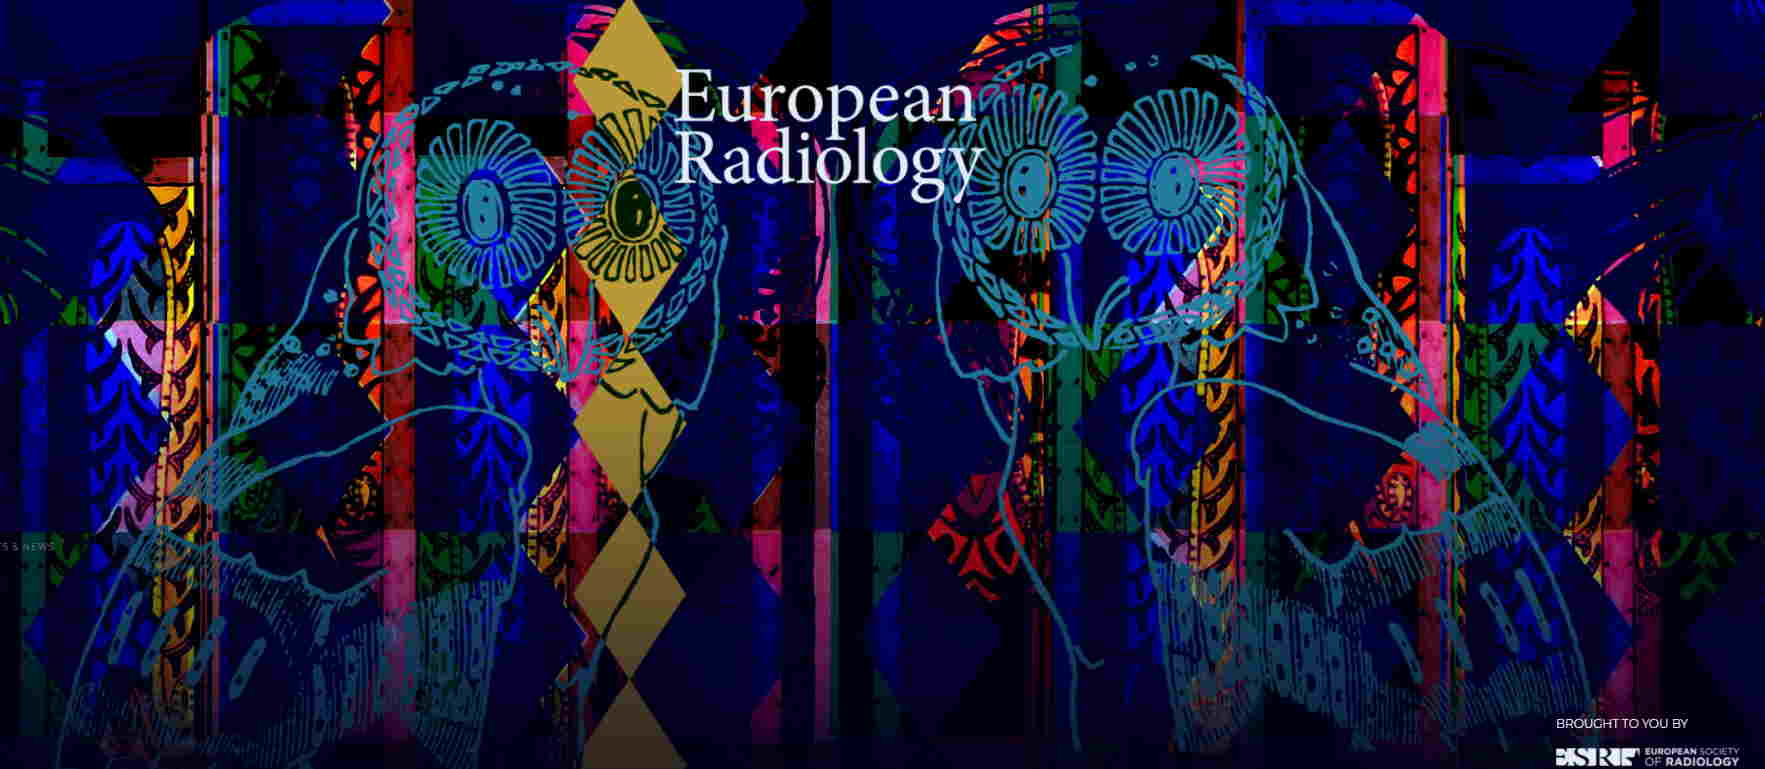 Article de European Radiology